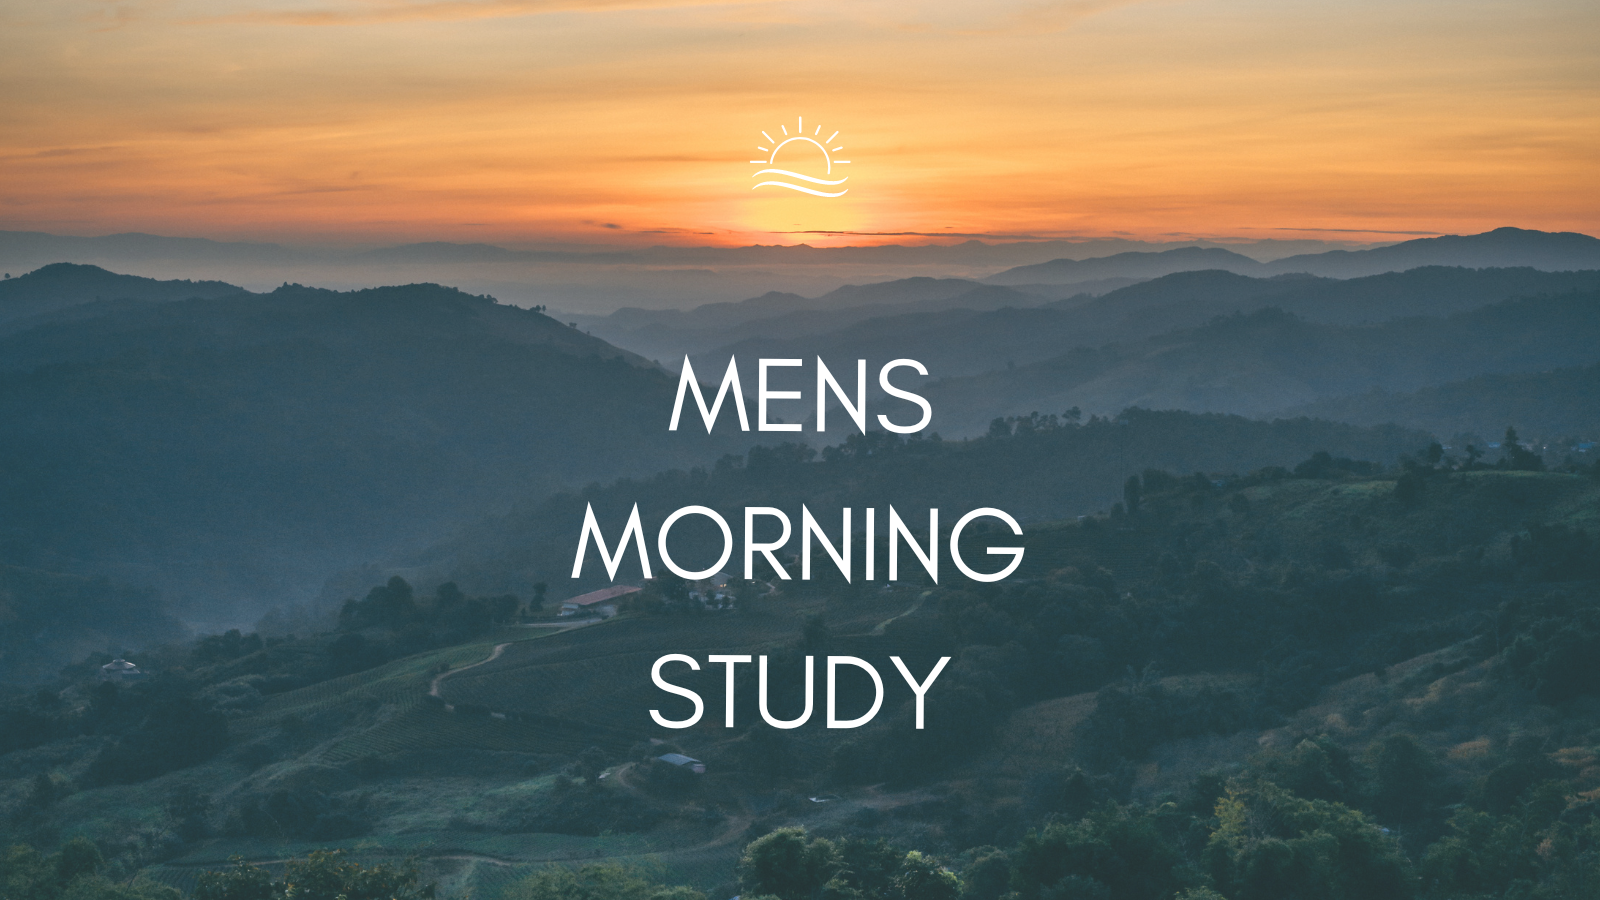 Mens Morning Study (1600 × 900 px) (1) image